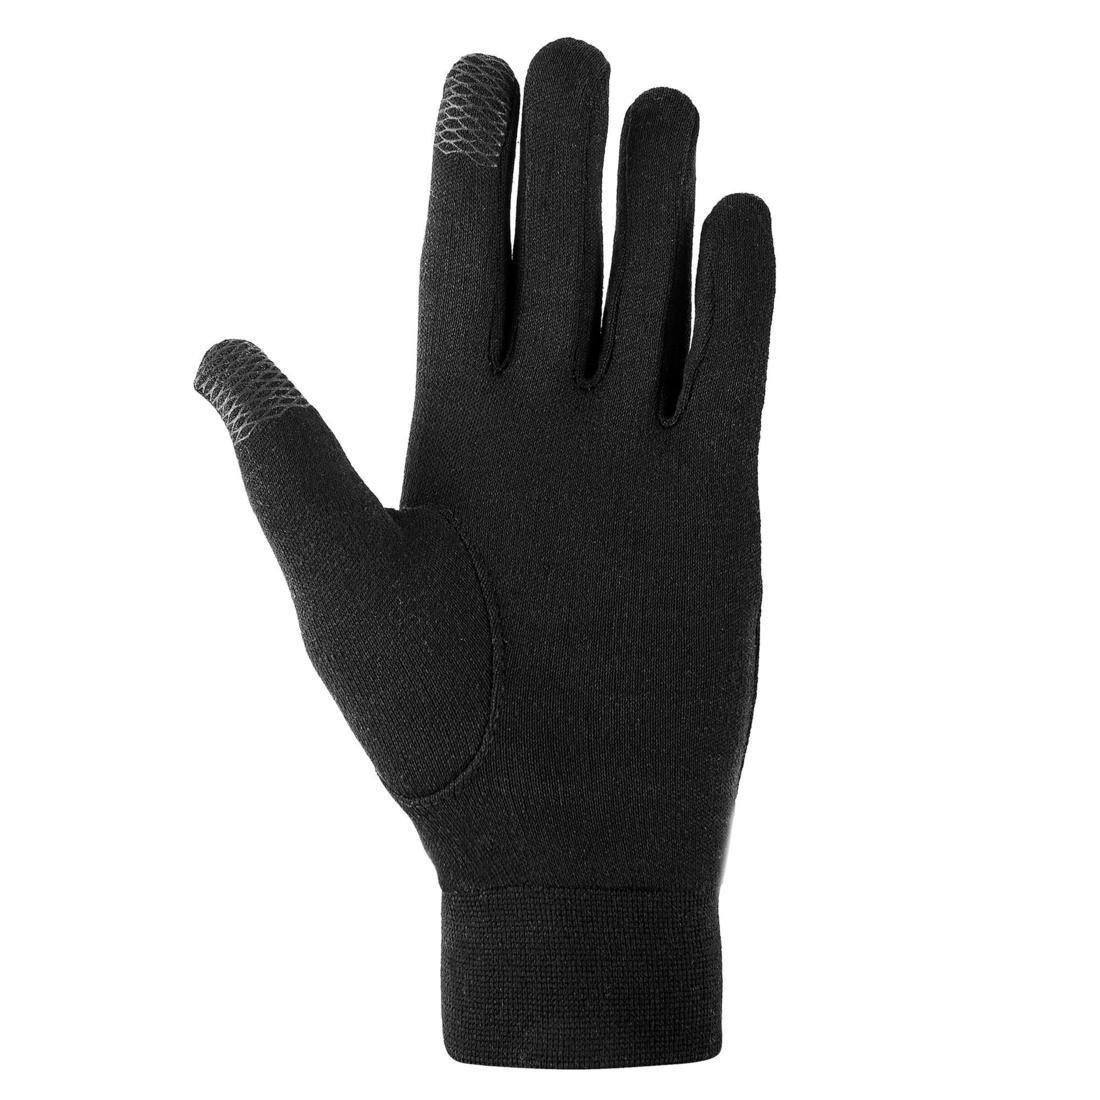 QUECHUA - Childs Silk-Liner Gloves, Black